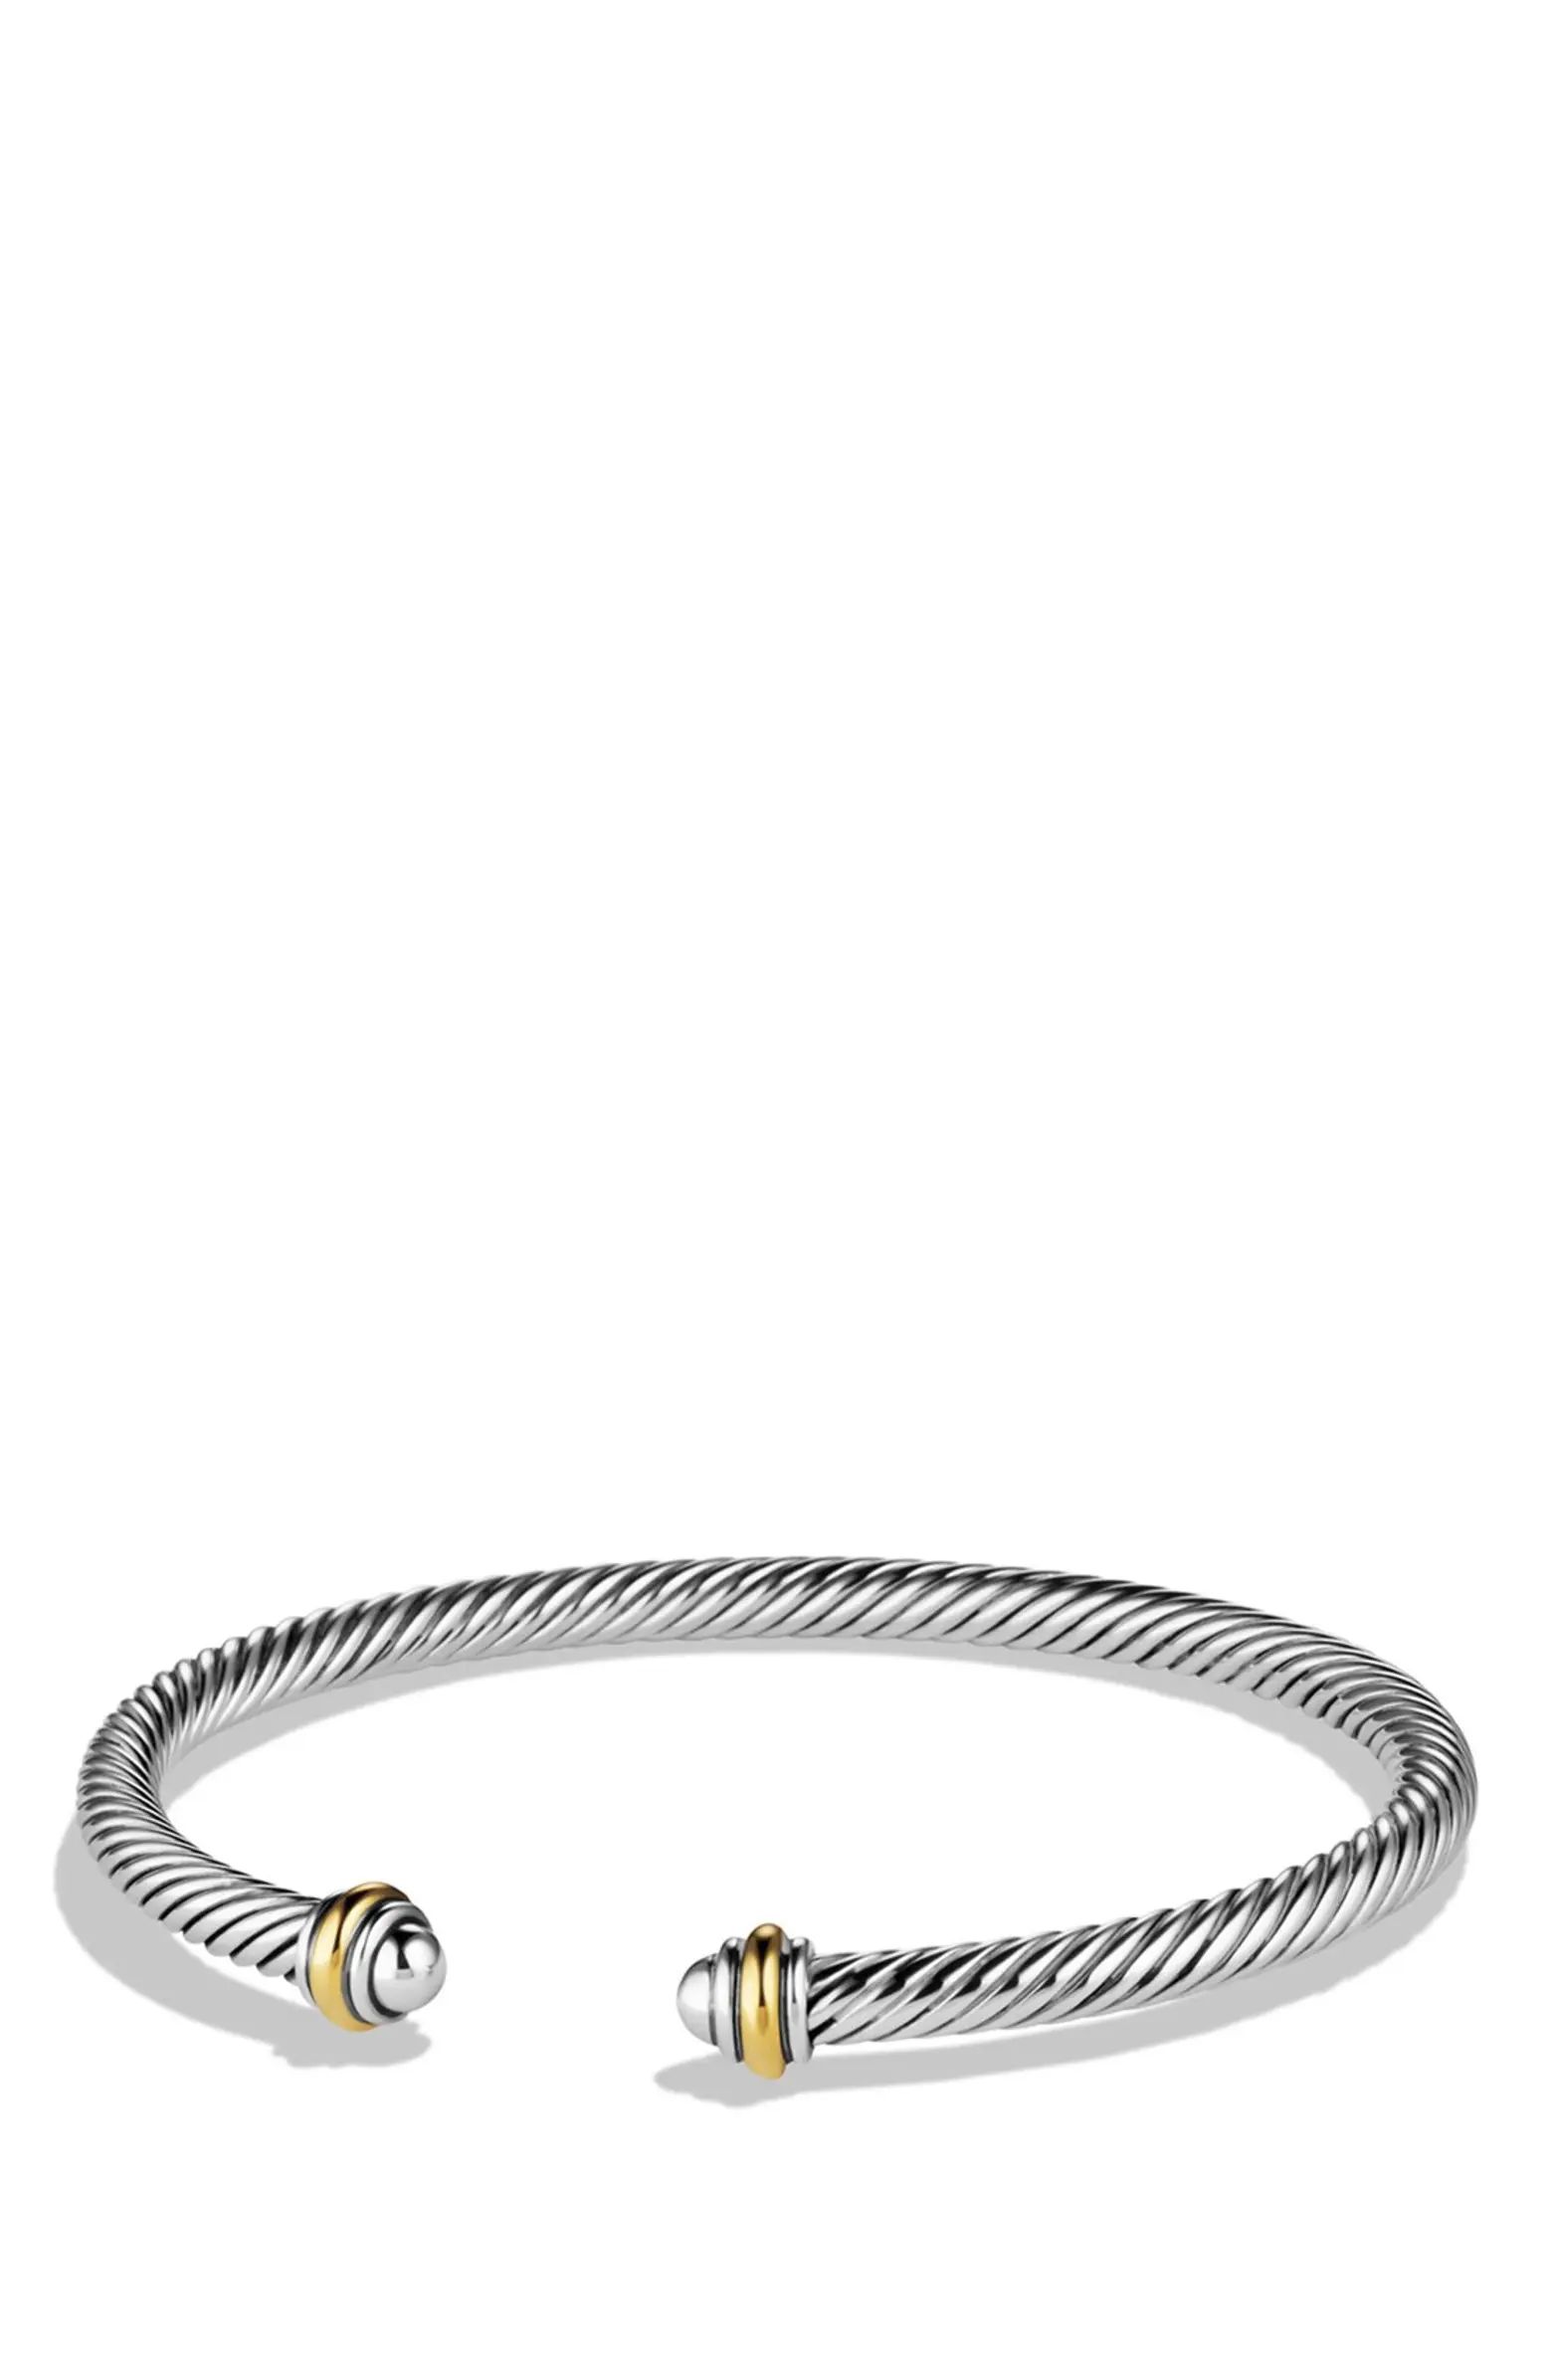 David Yurman Cable Classics Bracelet with 18K Gold, 4mm | Nordstrom | Nordstrom